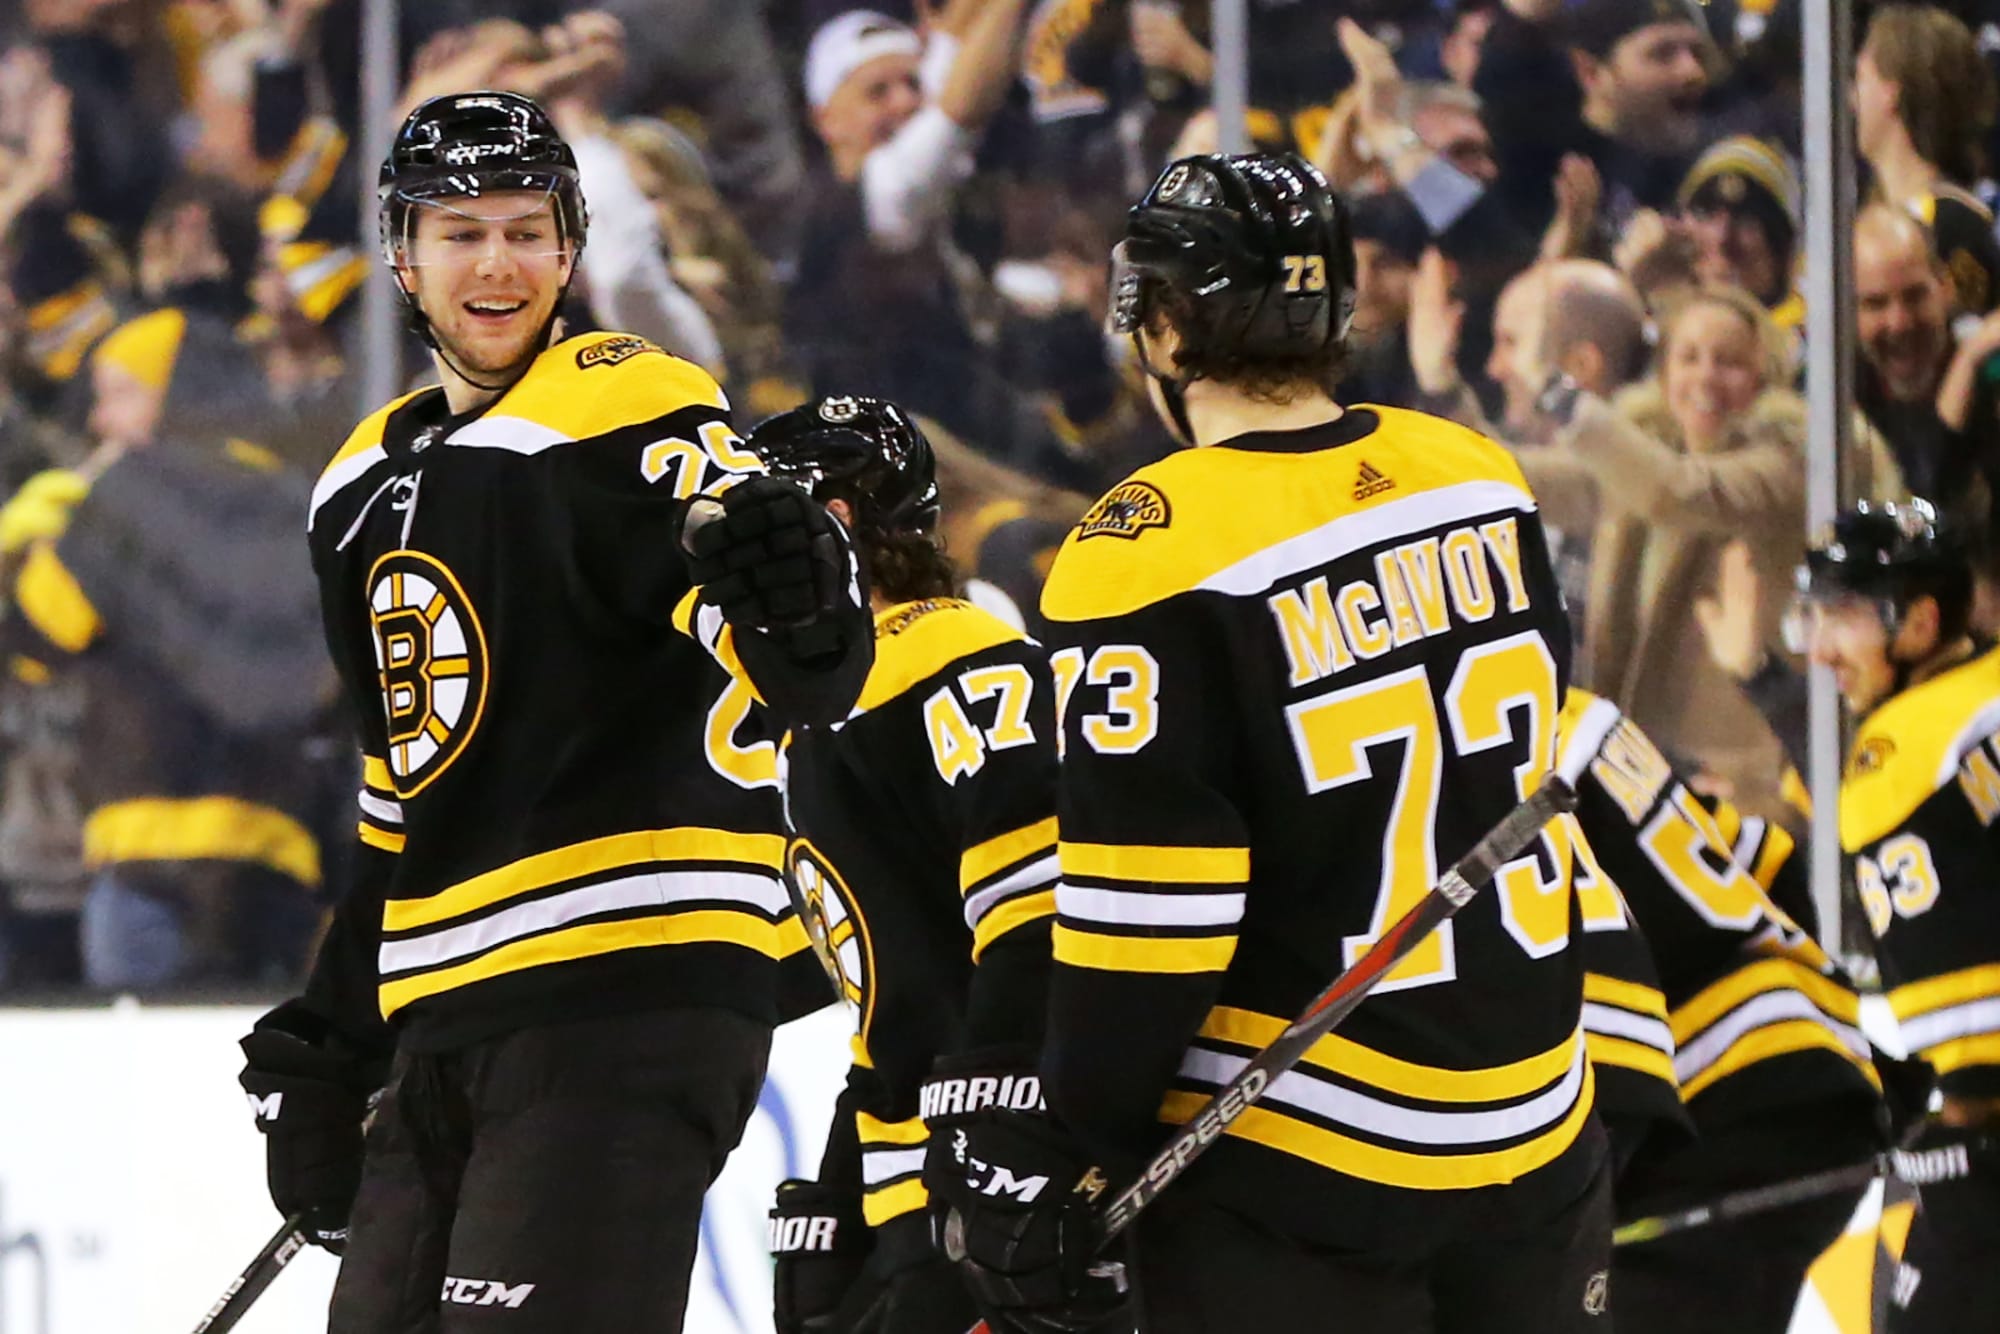 Boston Bruins: No Goals, But Charlie McAvoy Makes Impact on Defense